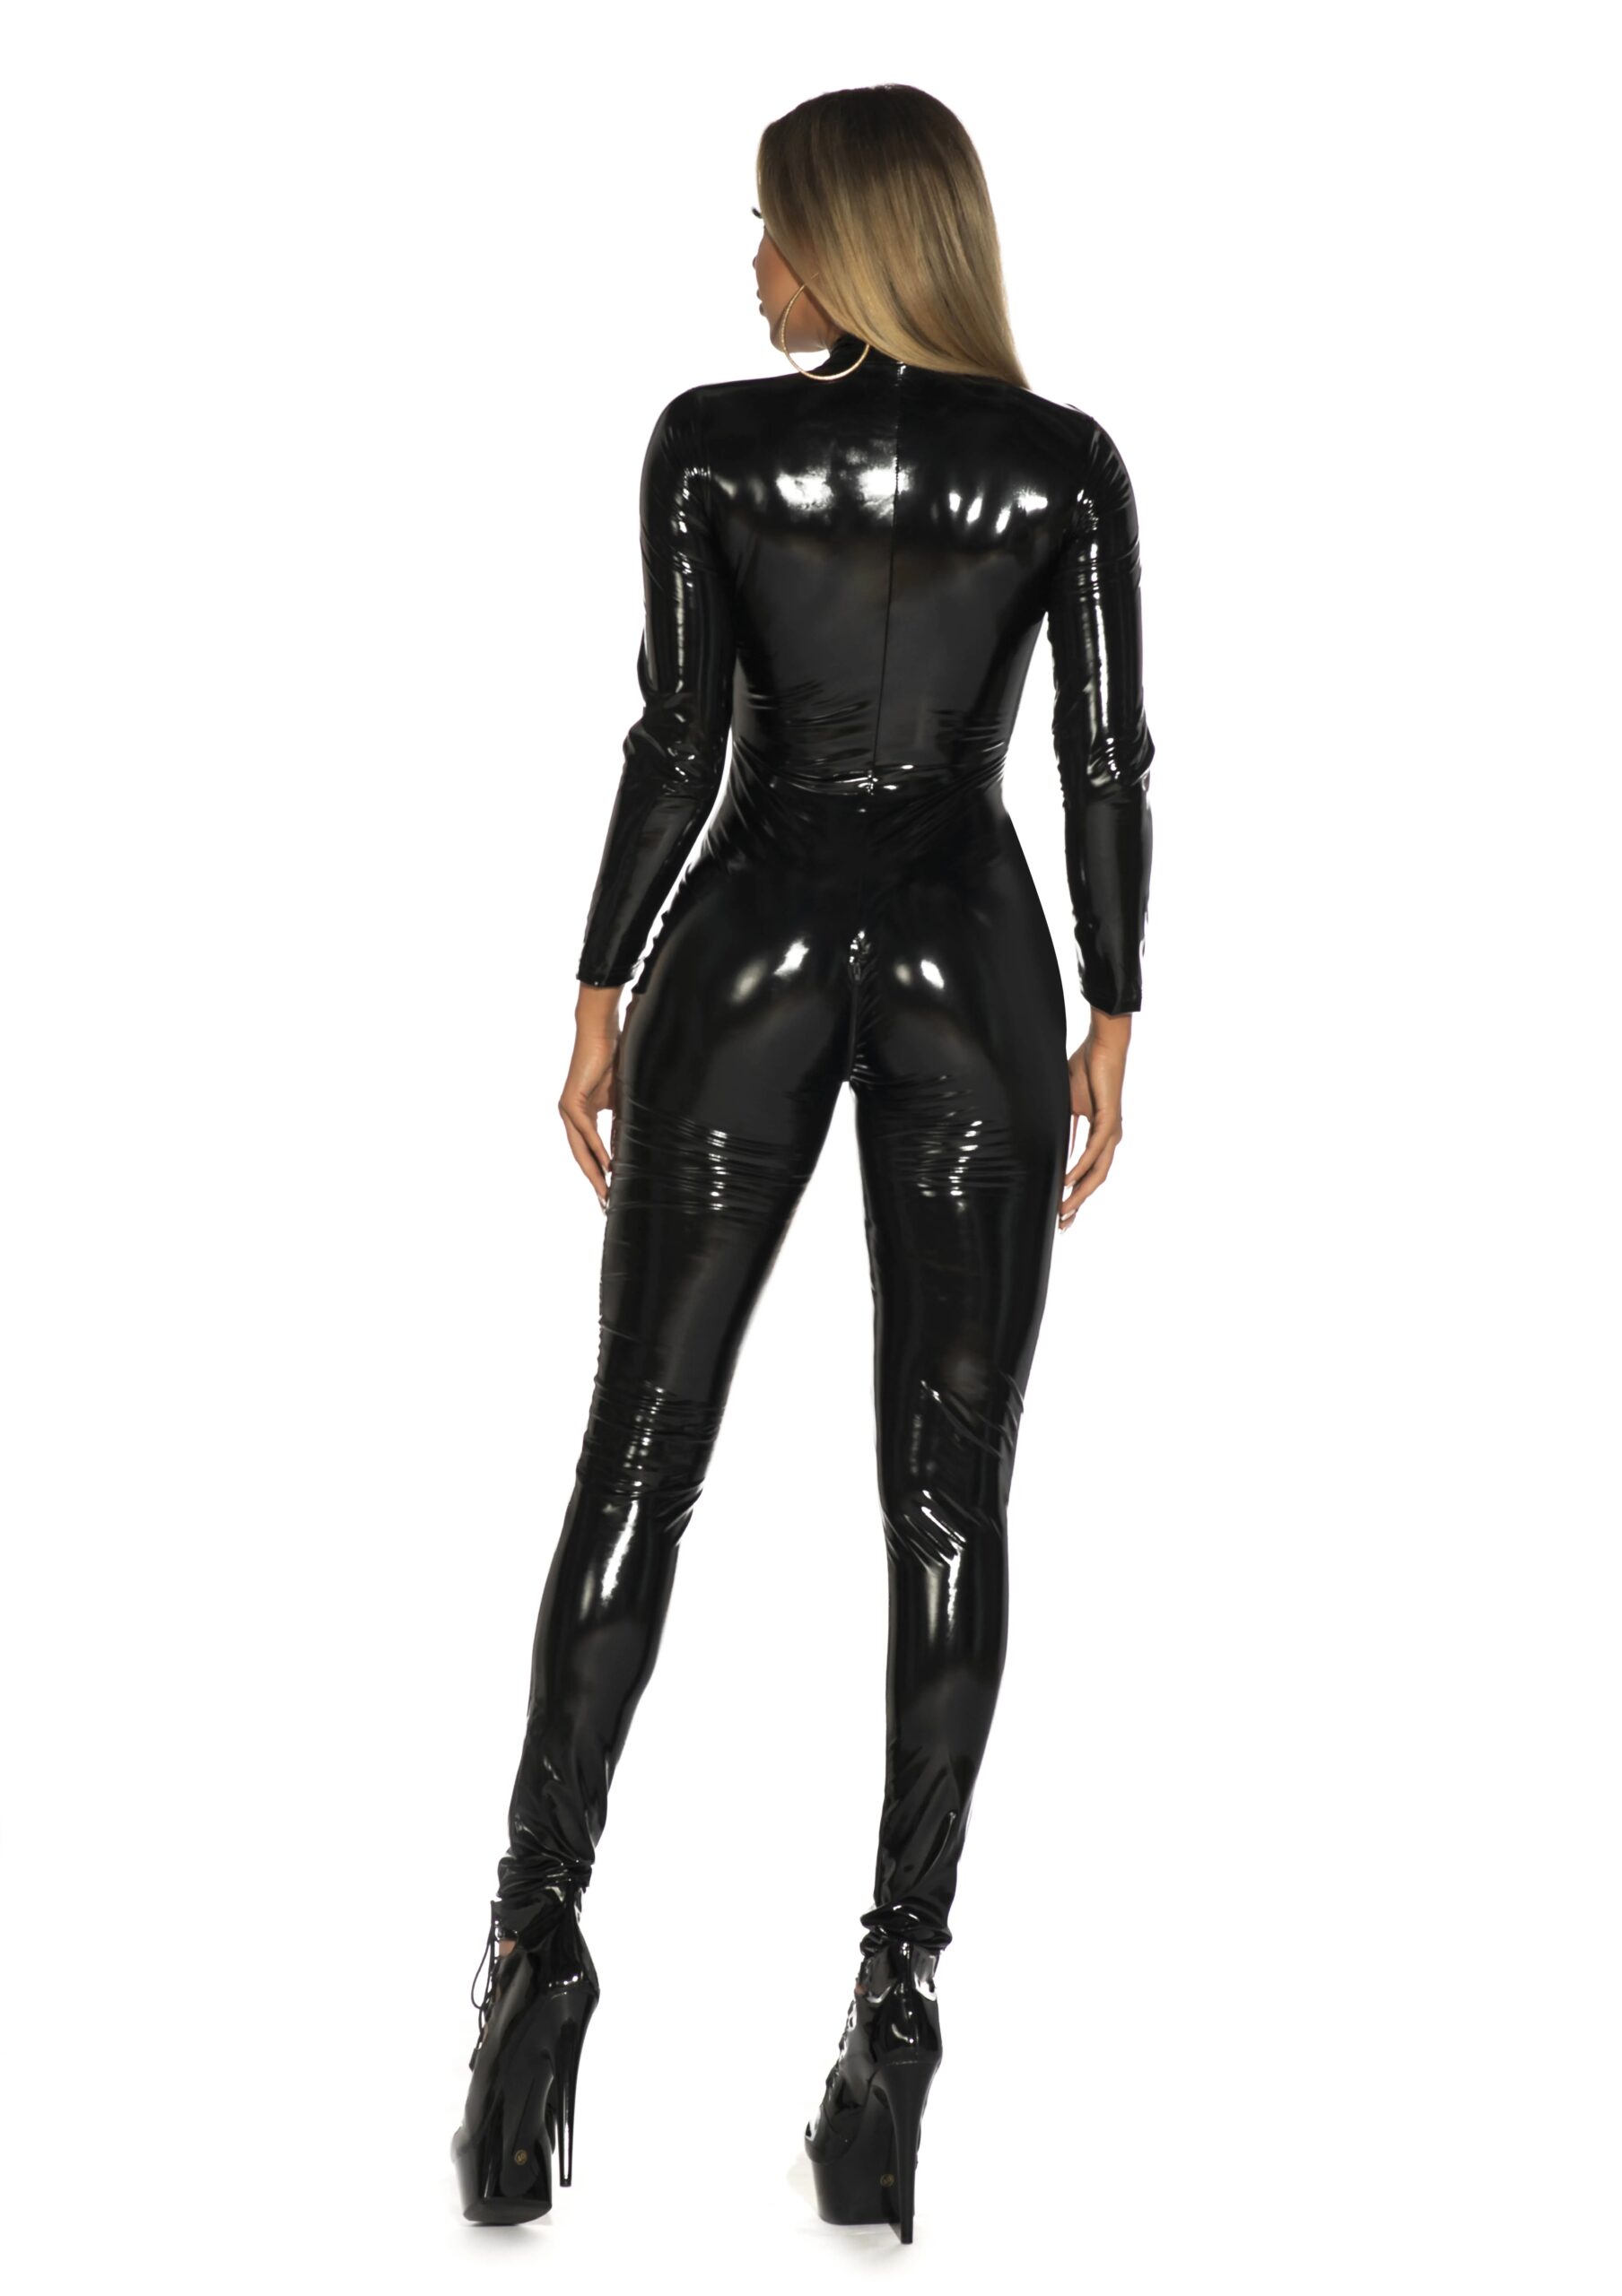 Large Size Latex Catsuit Faux Leather Women Jumpsuits Black wetlook PVC Bodysuit Sexy Bodycon Erotic Open Crotch clubwear